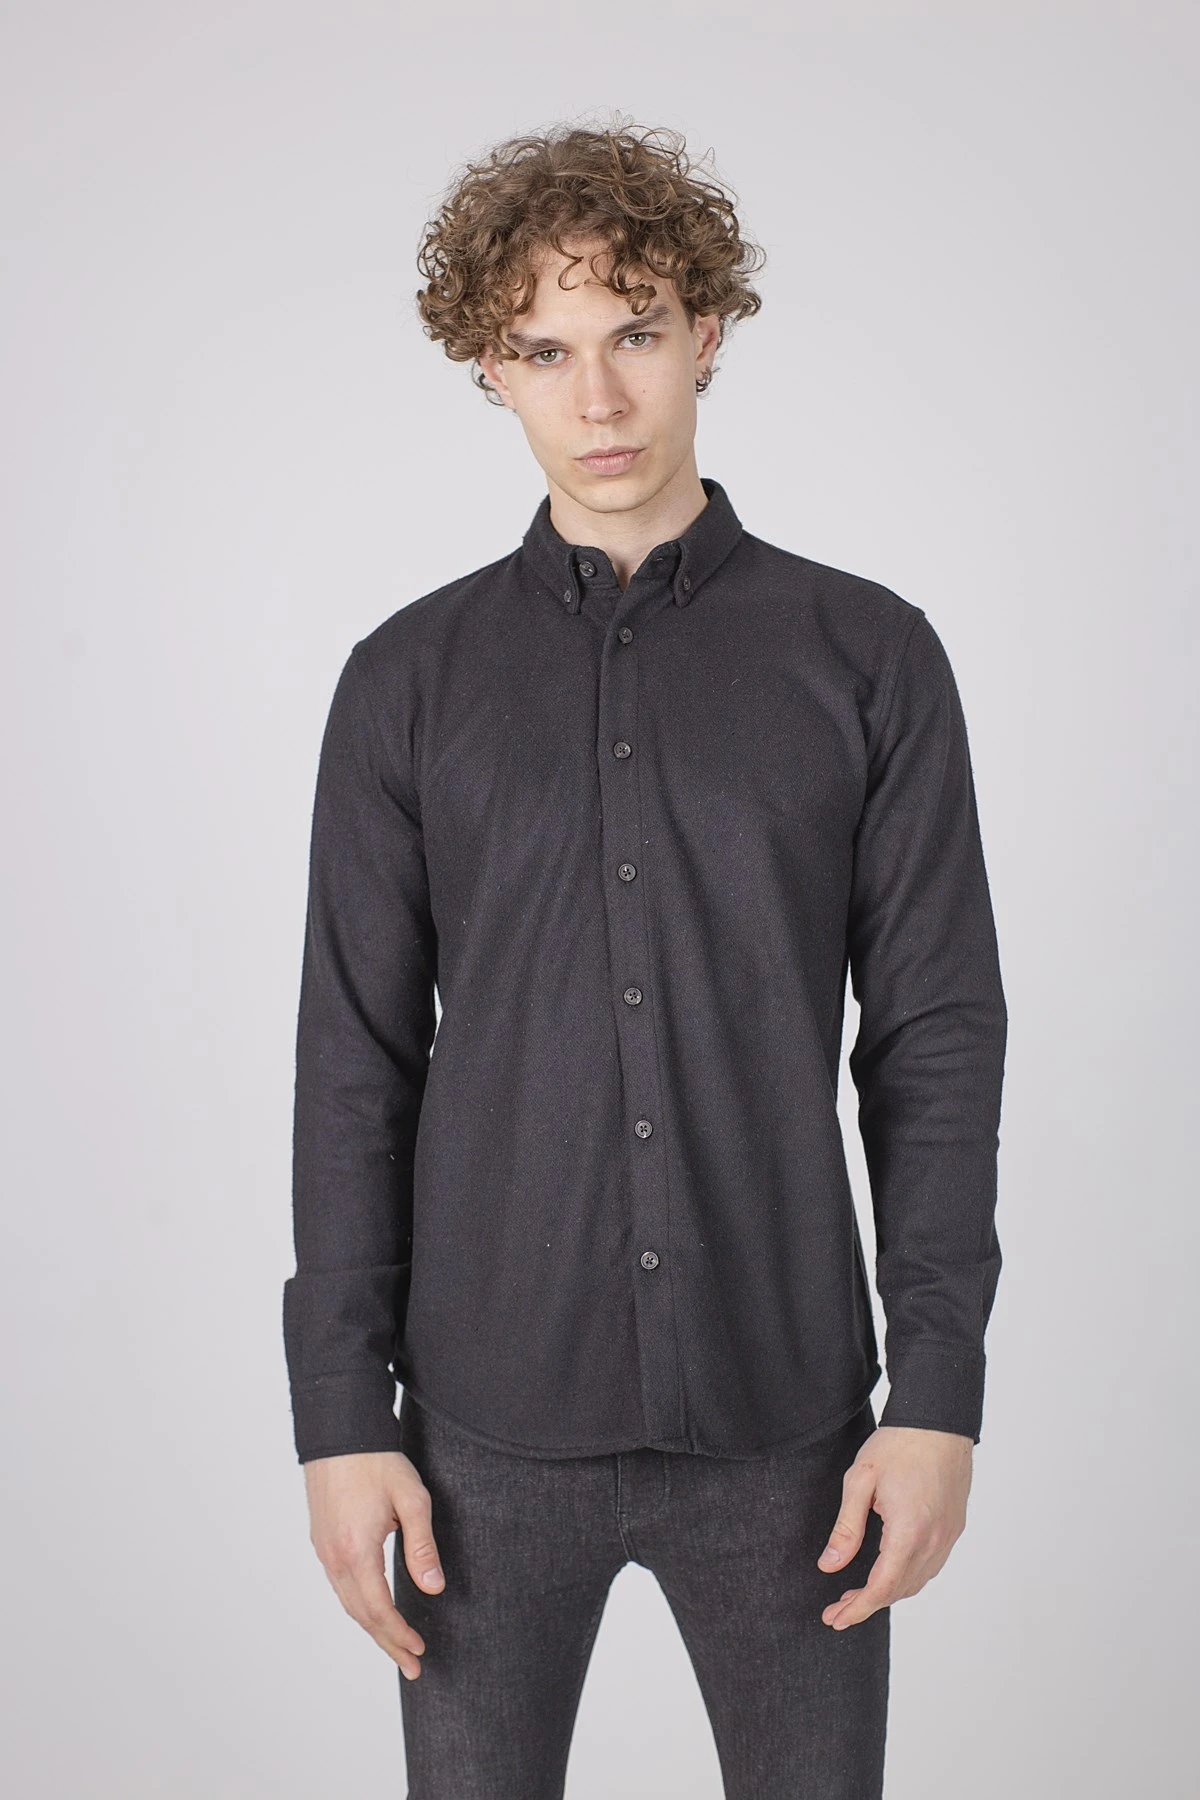 Camisa de leñador negra para hombre|Camisas informales| - AliExpress